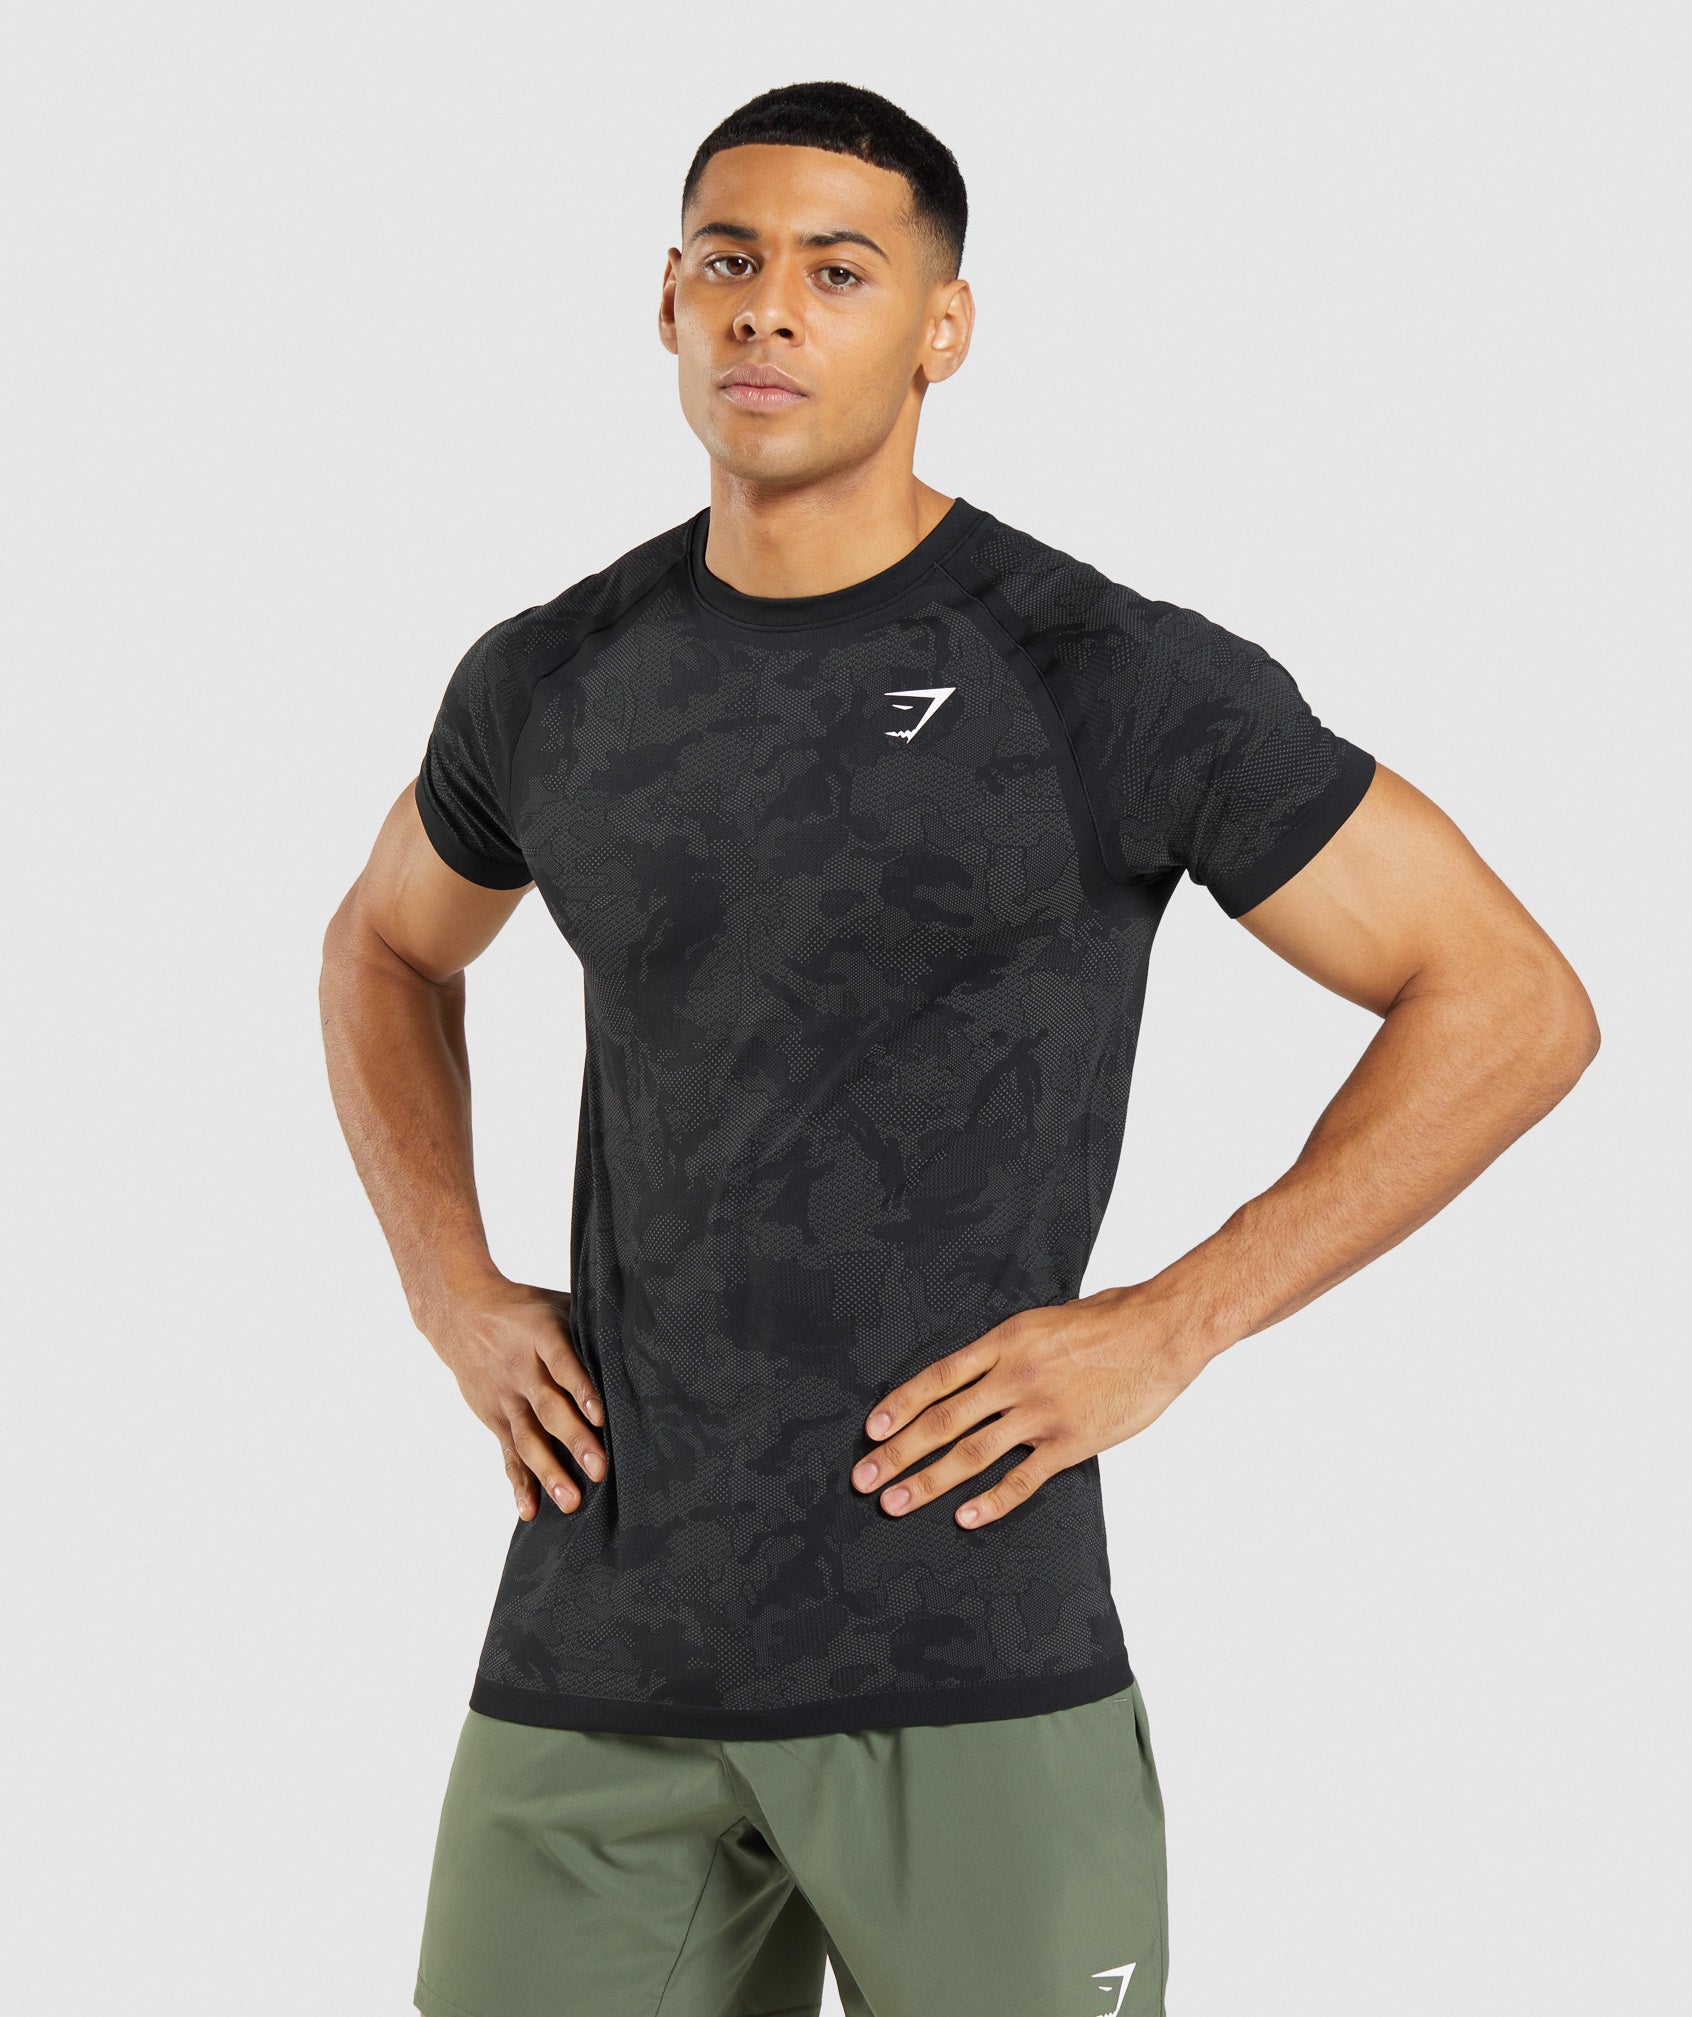 Geo Seamless T-Shirt in Black/Charcoal Grey